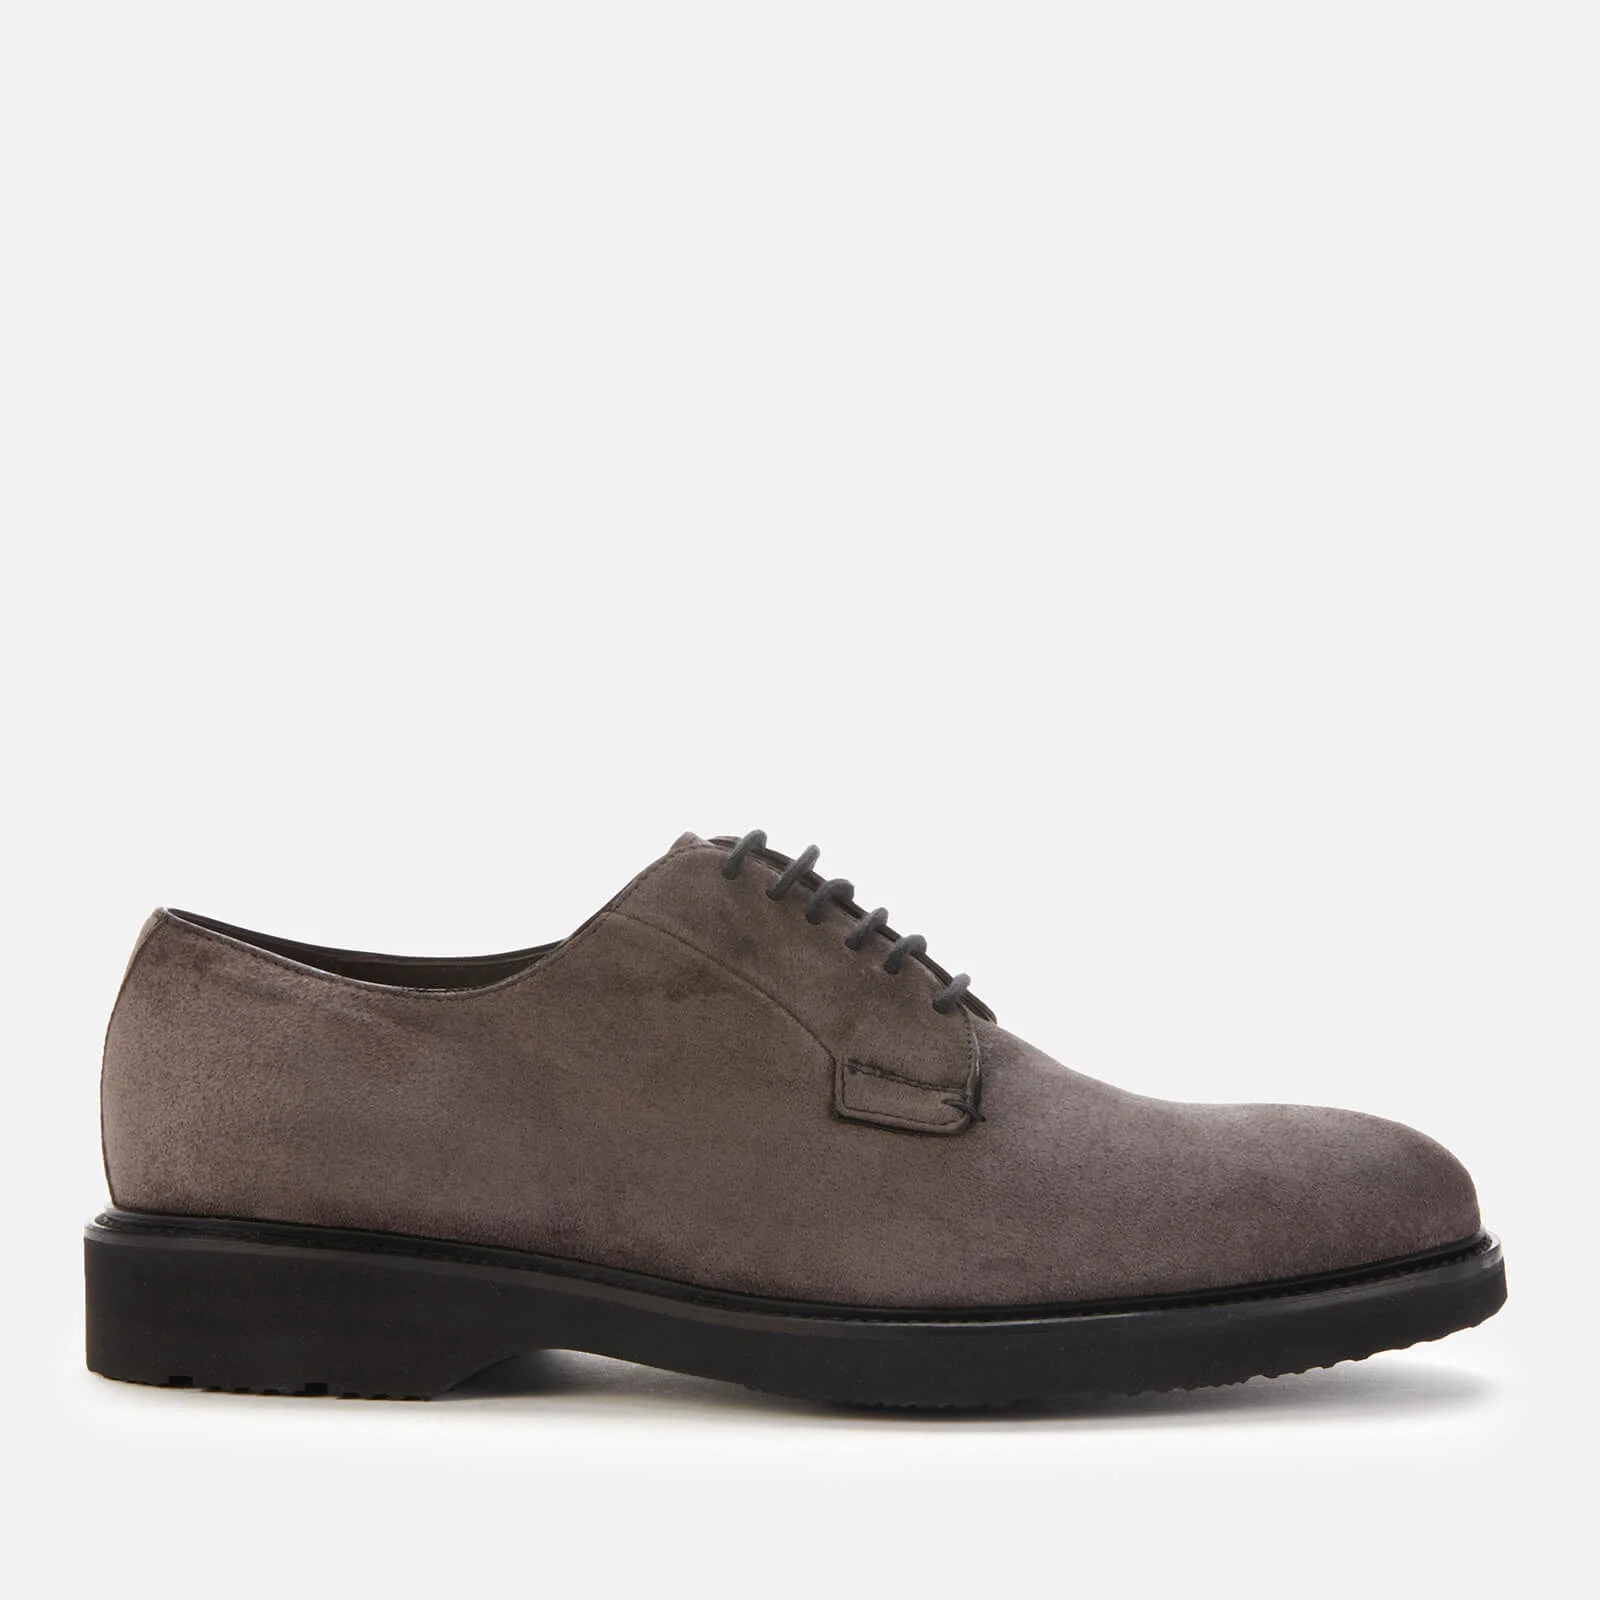 Canali Men's Suede Lace-up Crepe Sole Derby Shoes - Grey Image 1